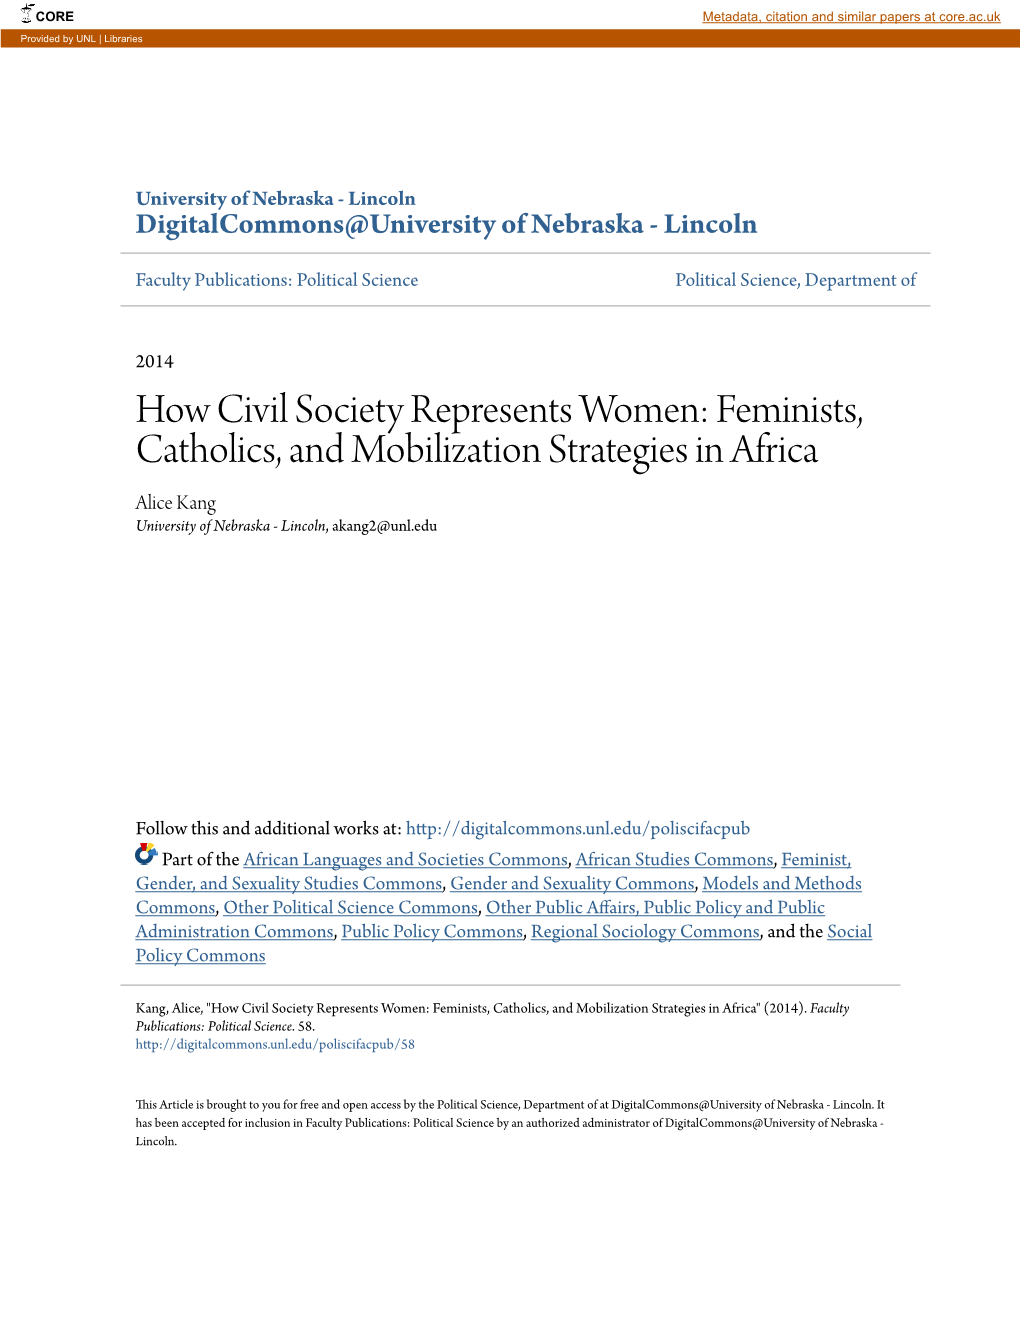 How Civil Society Represents Women: Feminists, Catholics, and Mobilization Strategies in Africa Alice Kang University of Nebraska - Lincoln, Akang2@Unl.Edu